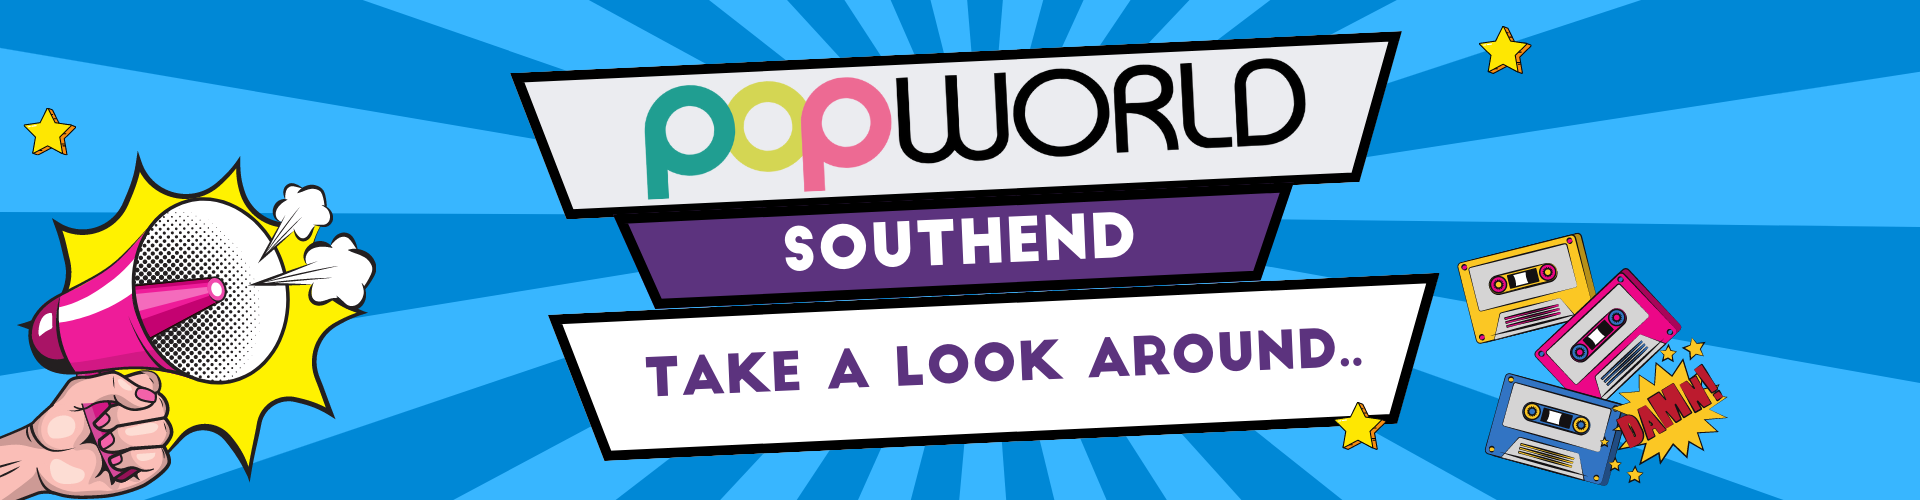 Take a look around Popworld Southend